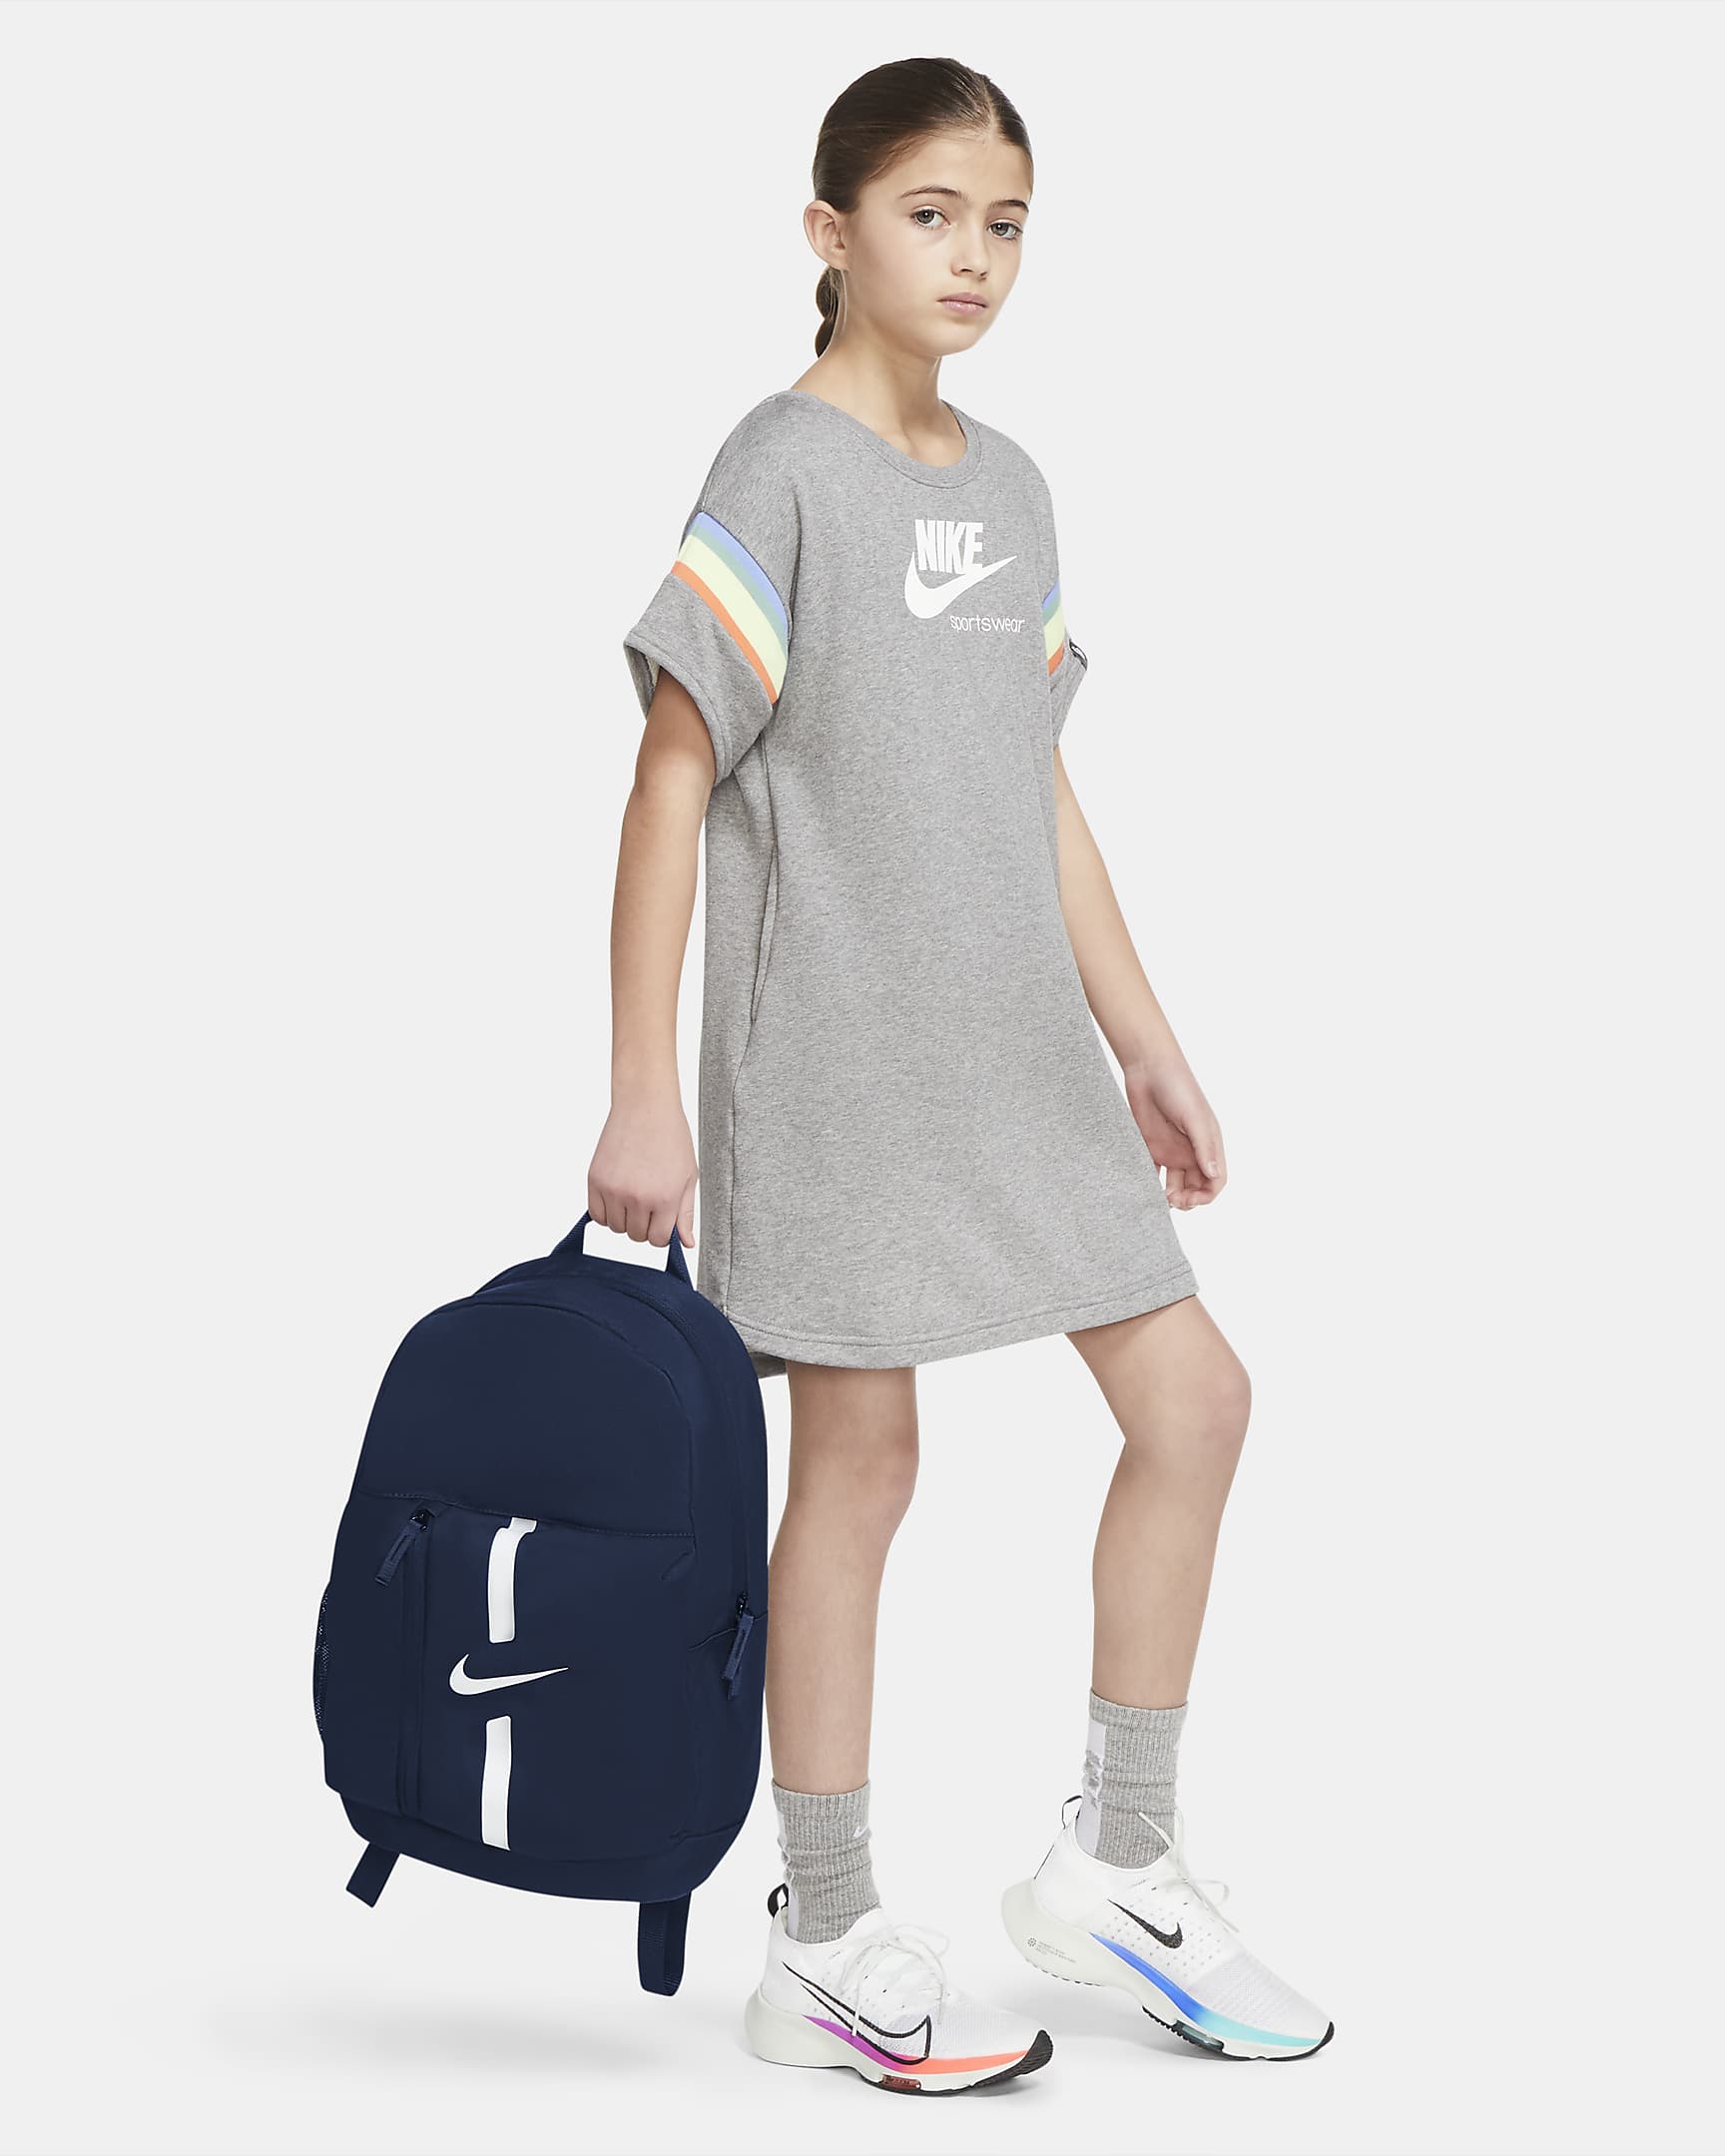 Nike Academy Team Kids' Football Backpack (22L) - Midnight Navy/Black/White